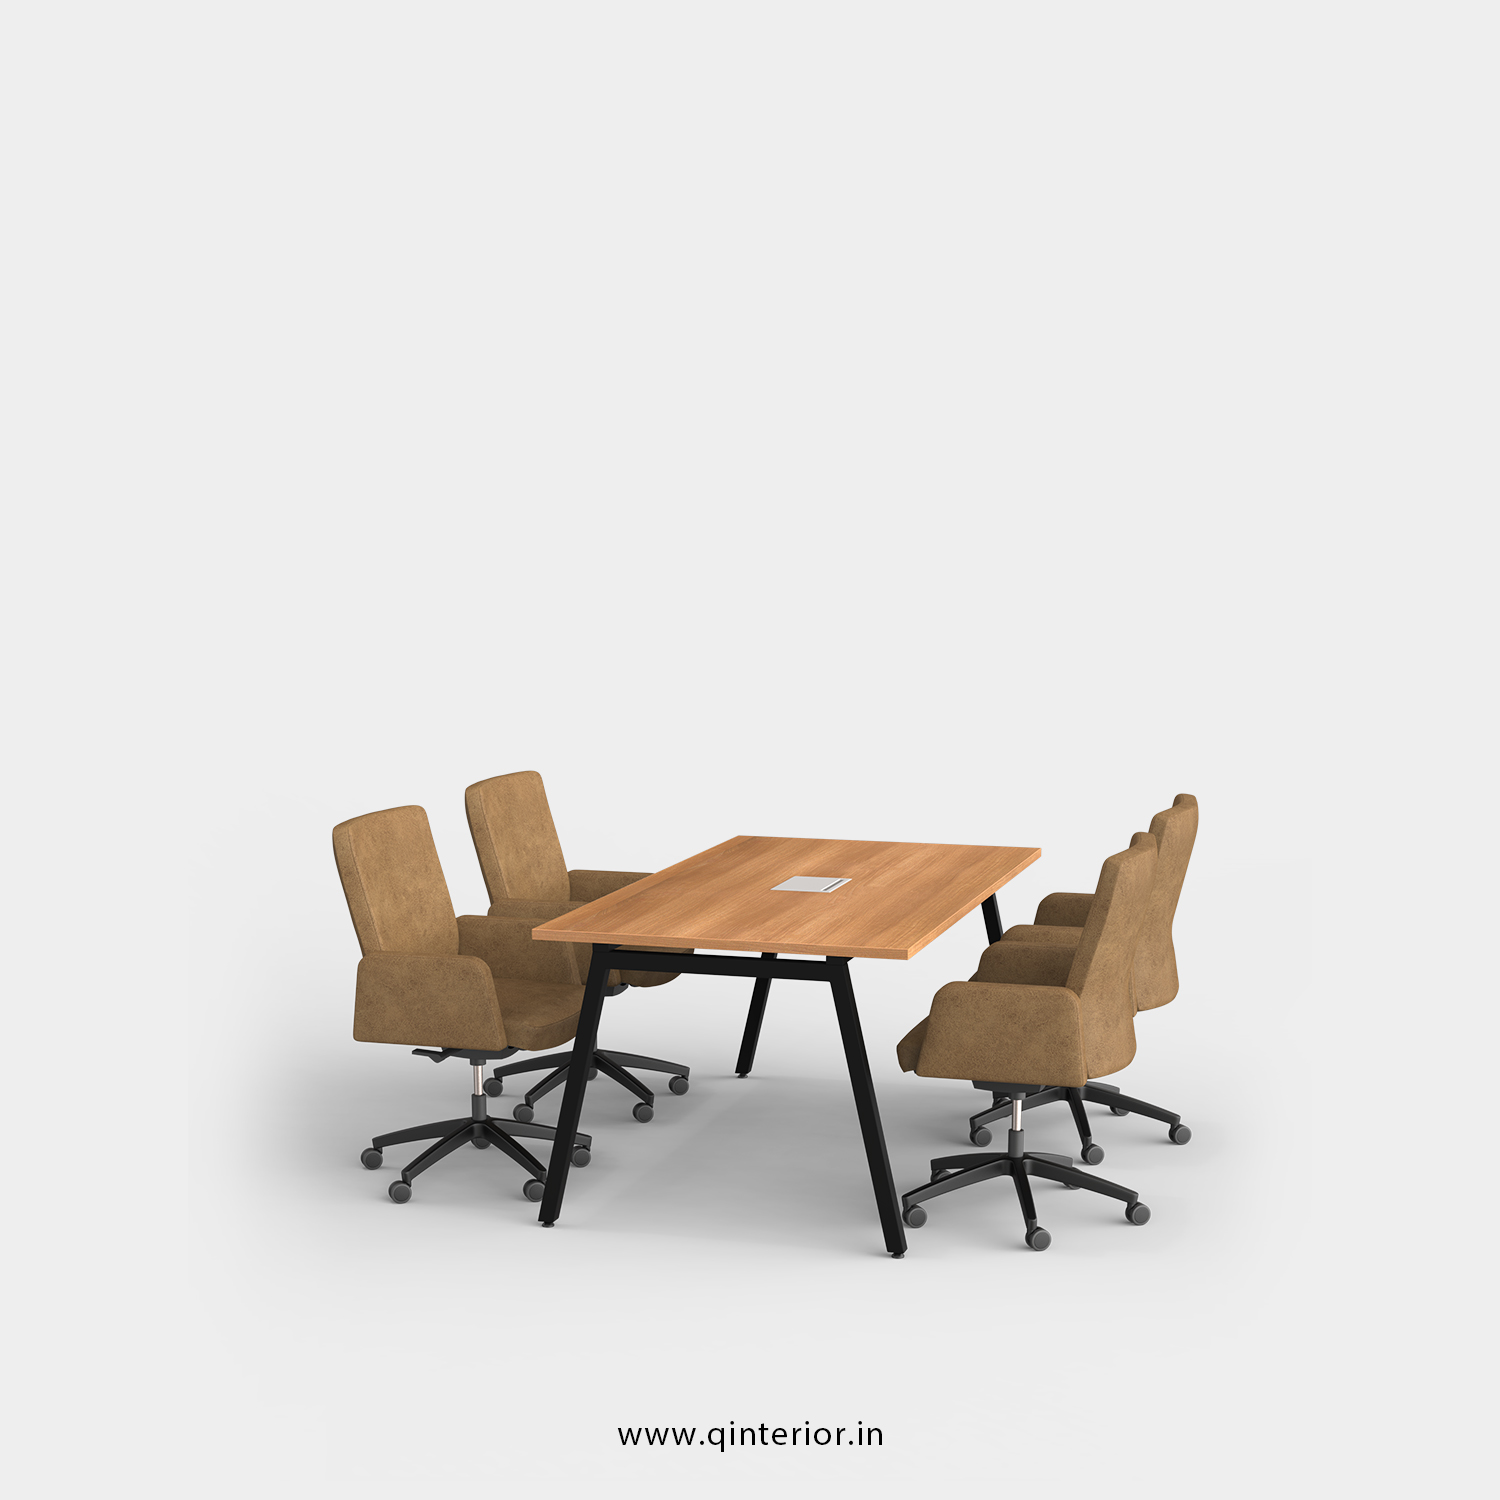 Berg Meeting Table in Oak Finish – OMT001 C2